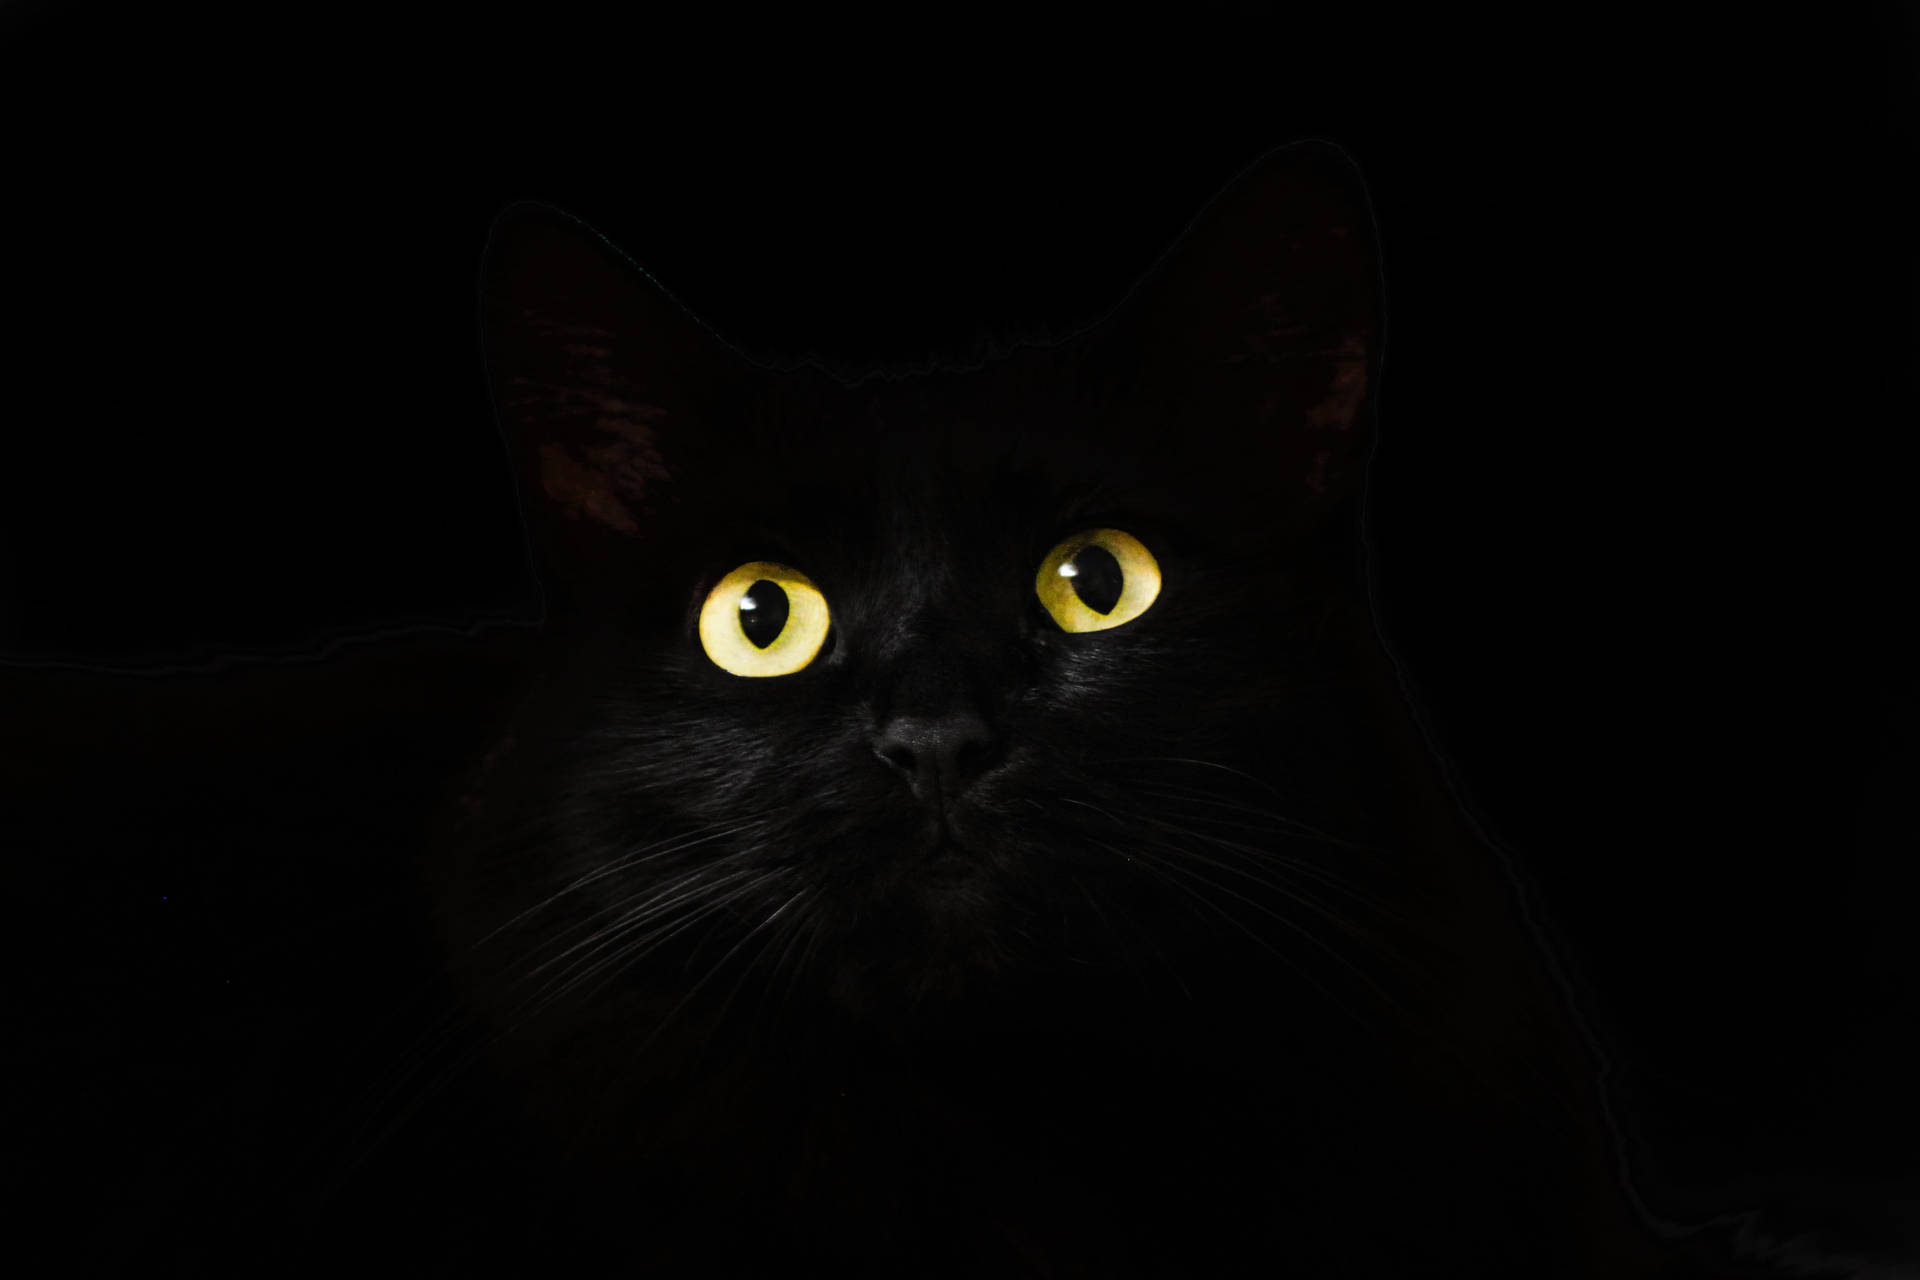 Free Black Cat Wallpaper Downloads, [200+] Black Cat Wallpapers for FREE |  